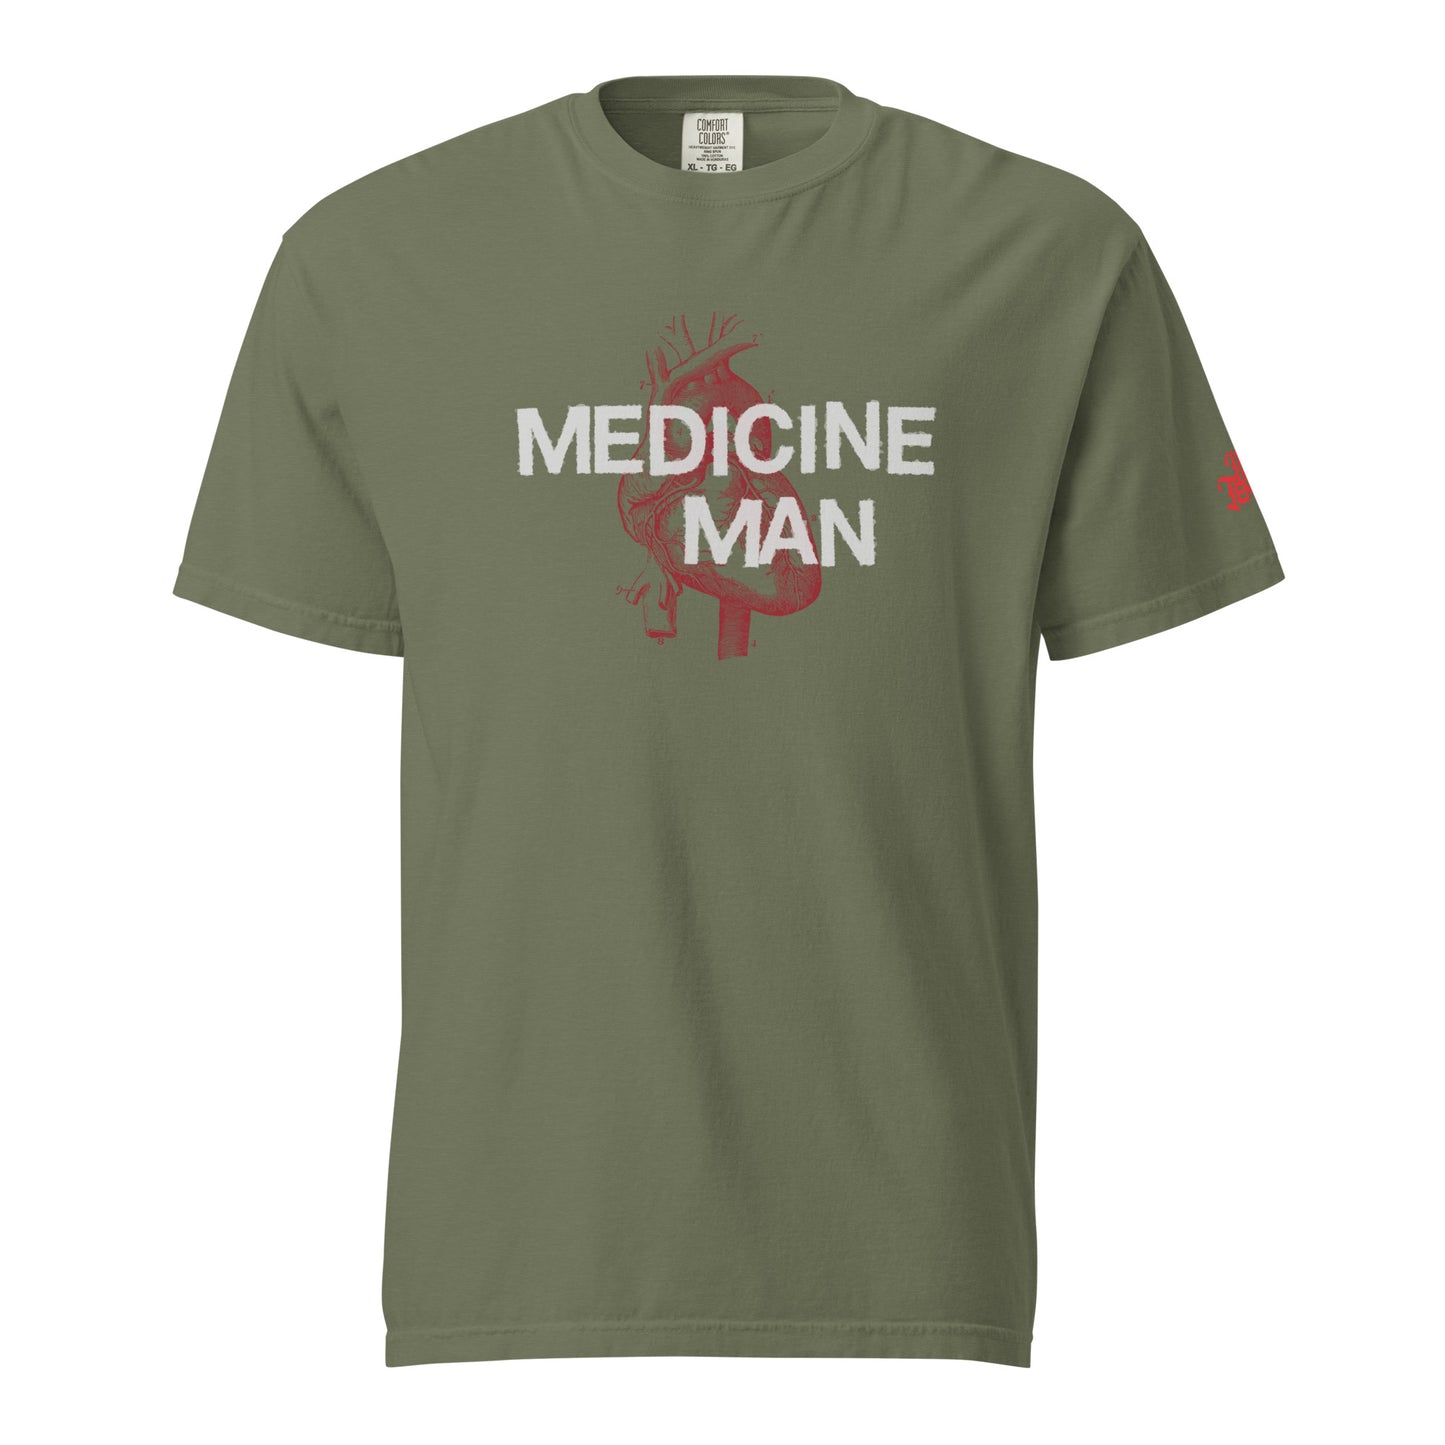 Red Temples "Medicine Man" Tee V2